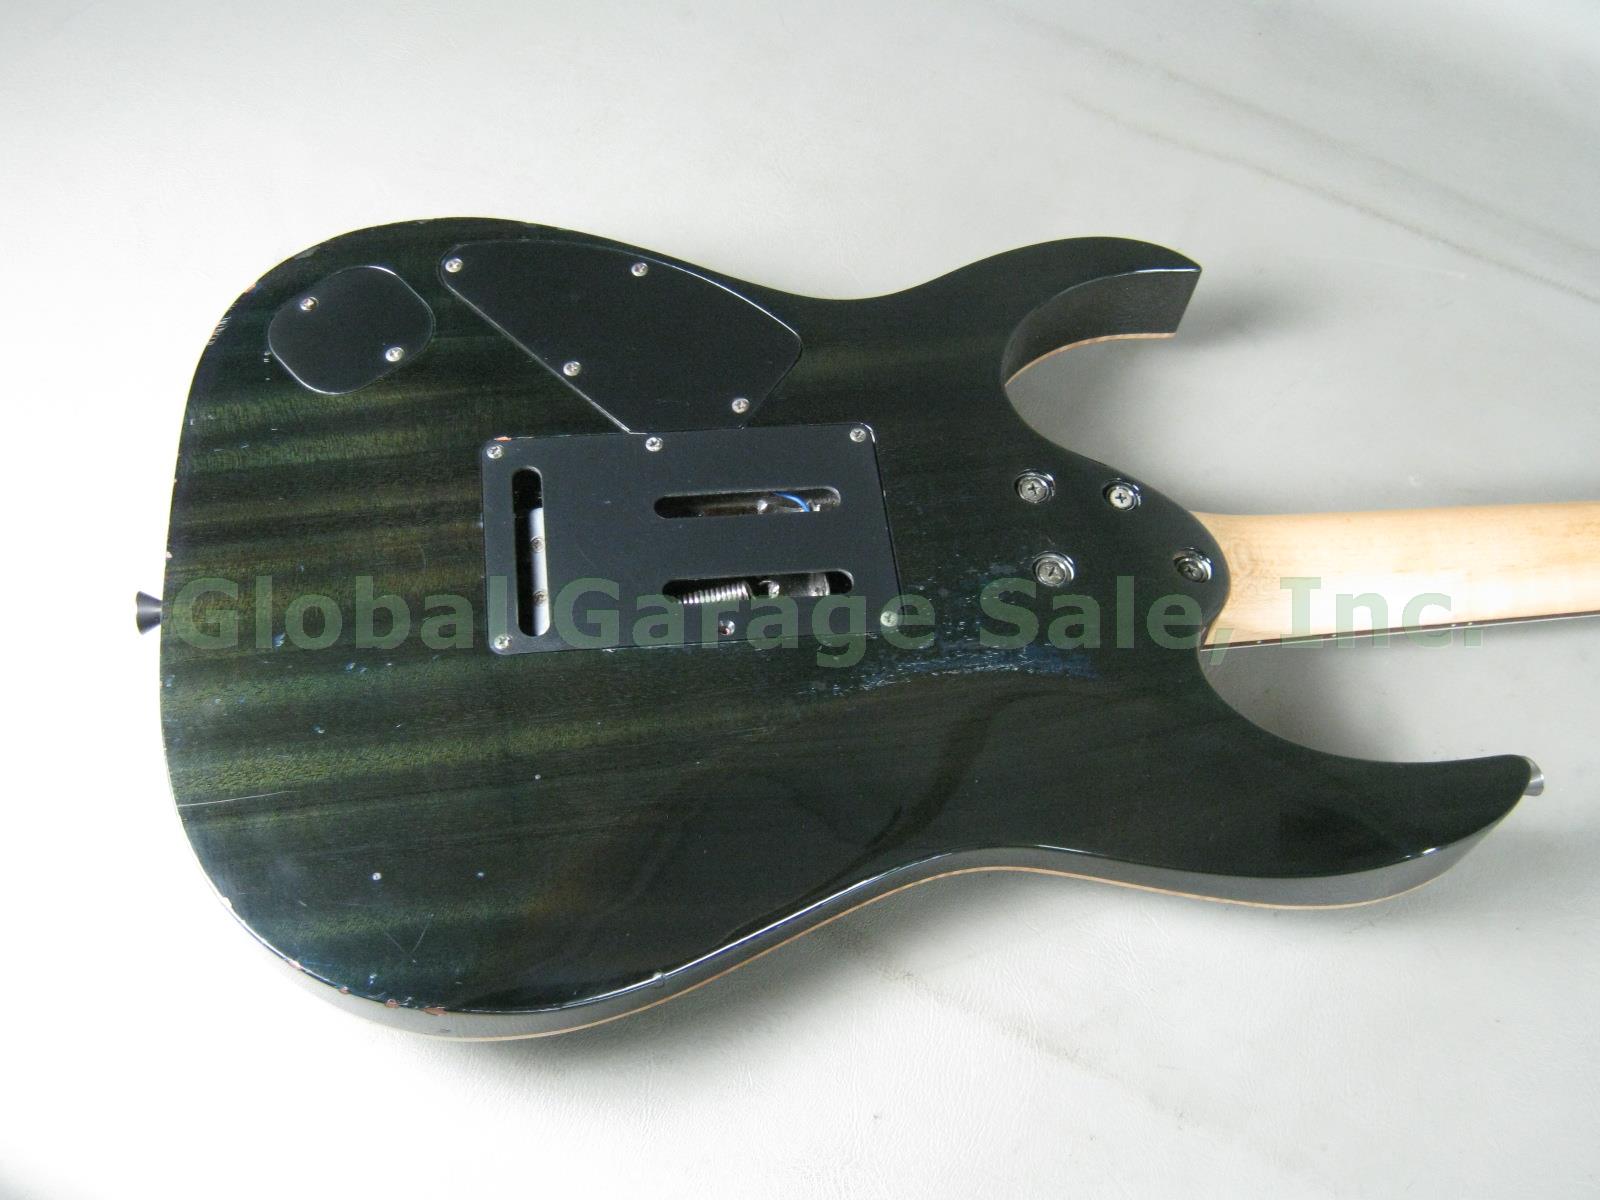 1999 Ibanez Prestige RG3120 Electric Guitar Blue Flame Maple Floyd Rose Tremolo 12